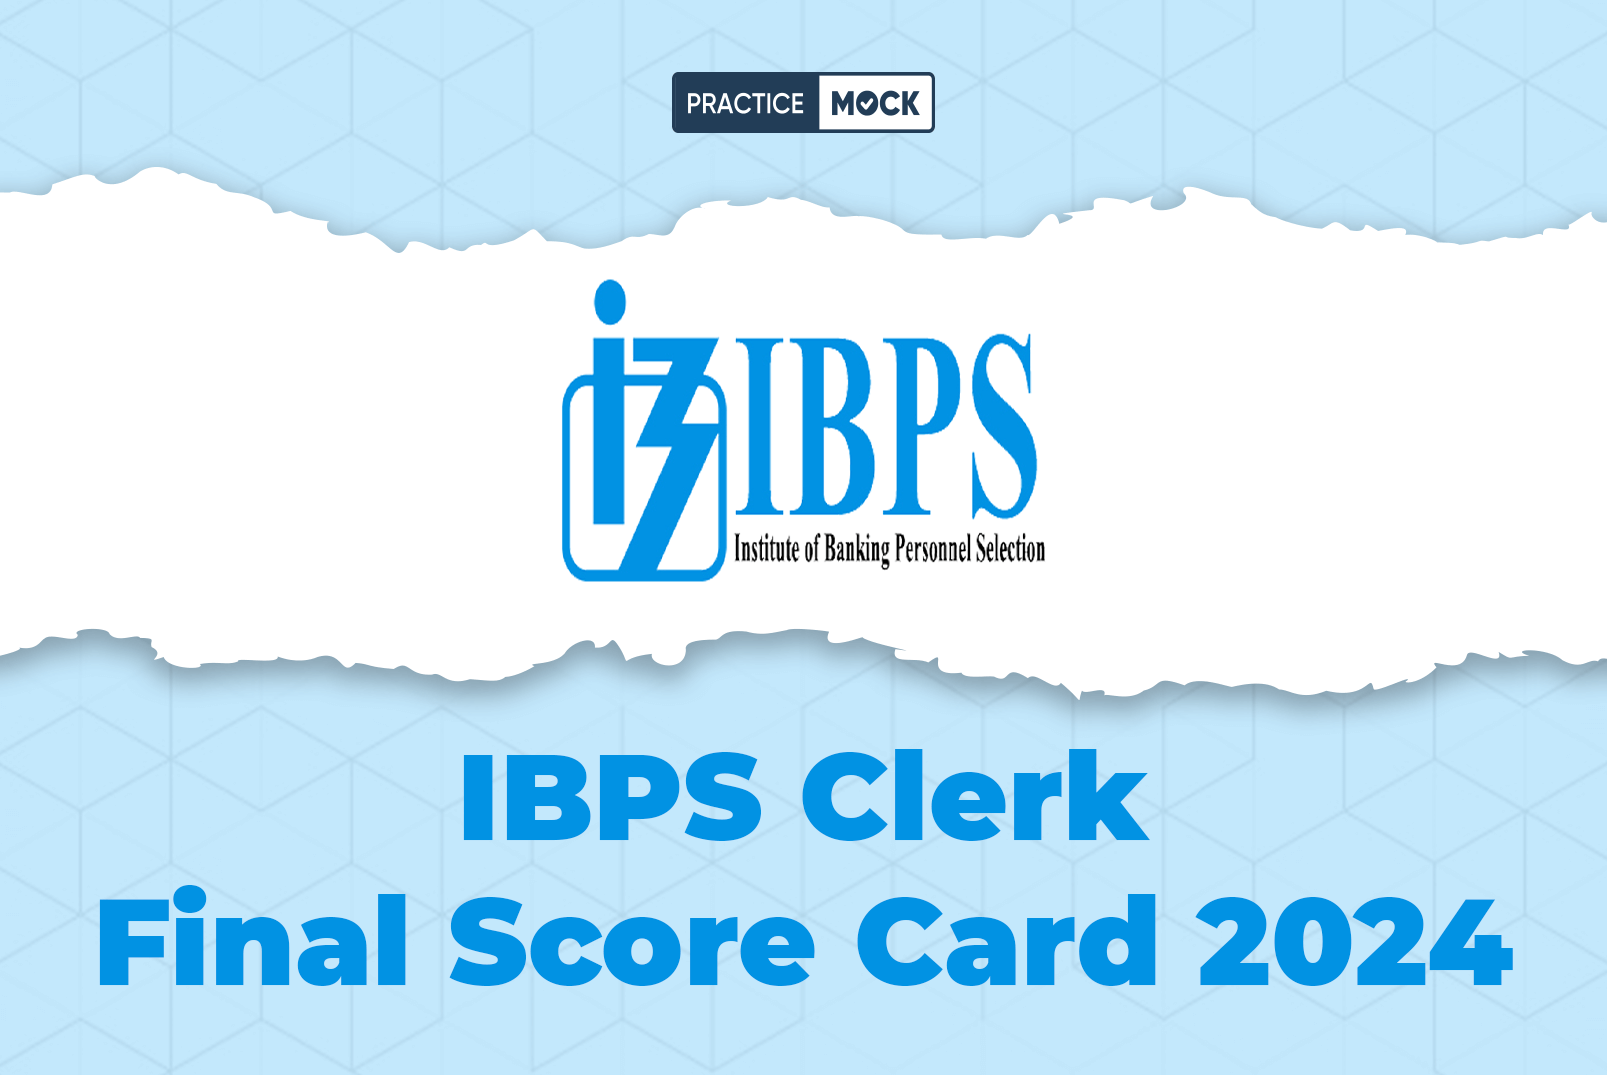 IBPS Clerk Score Card 2024